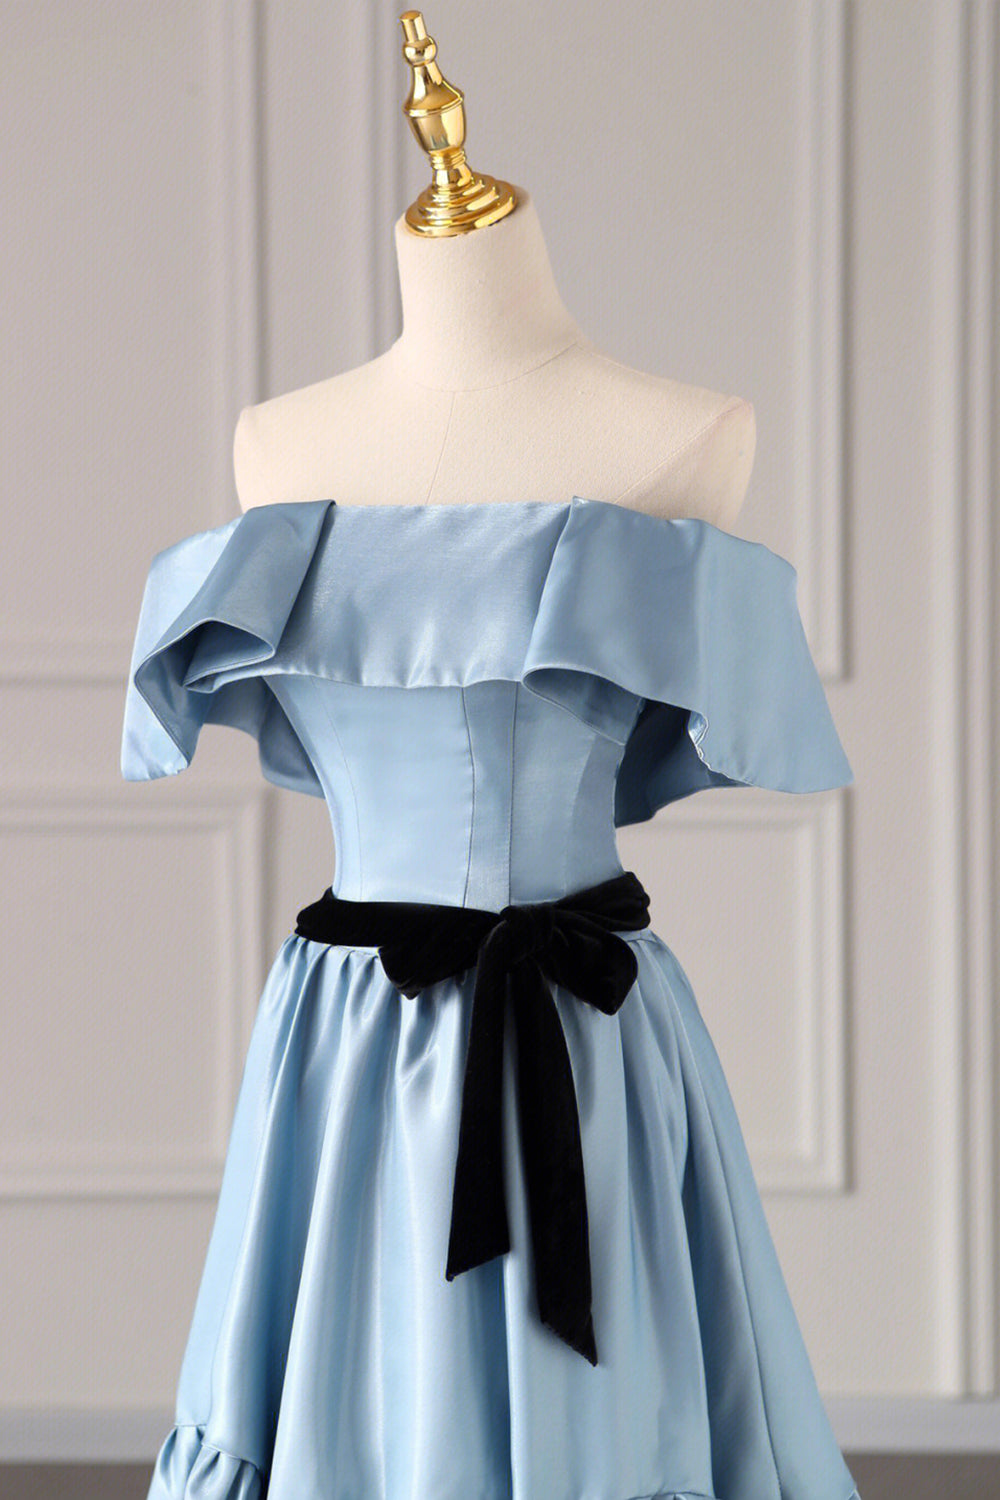 Blue Satin Long Formal Dress, Simple A-Line Strapless Prom Dress